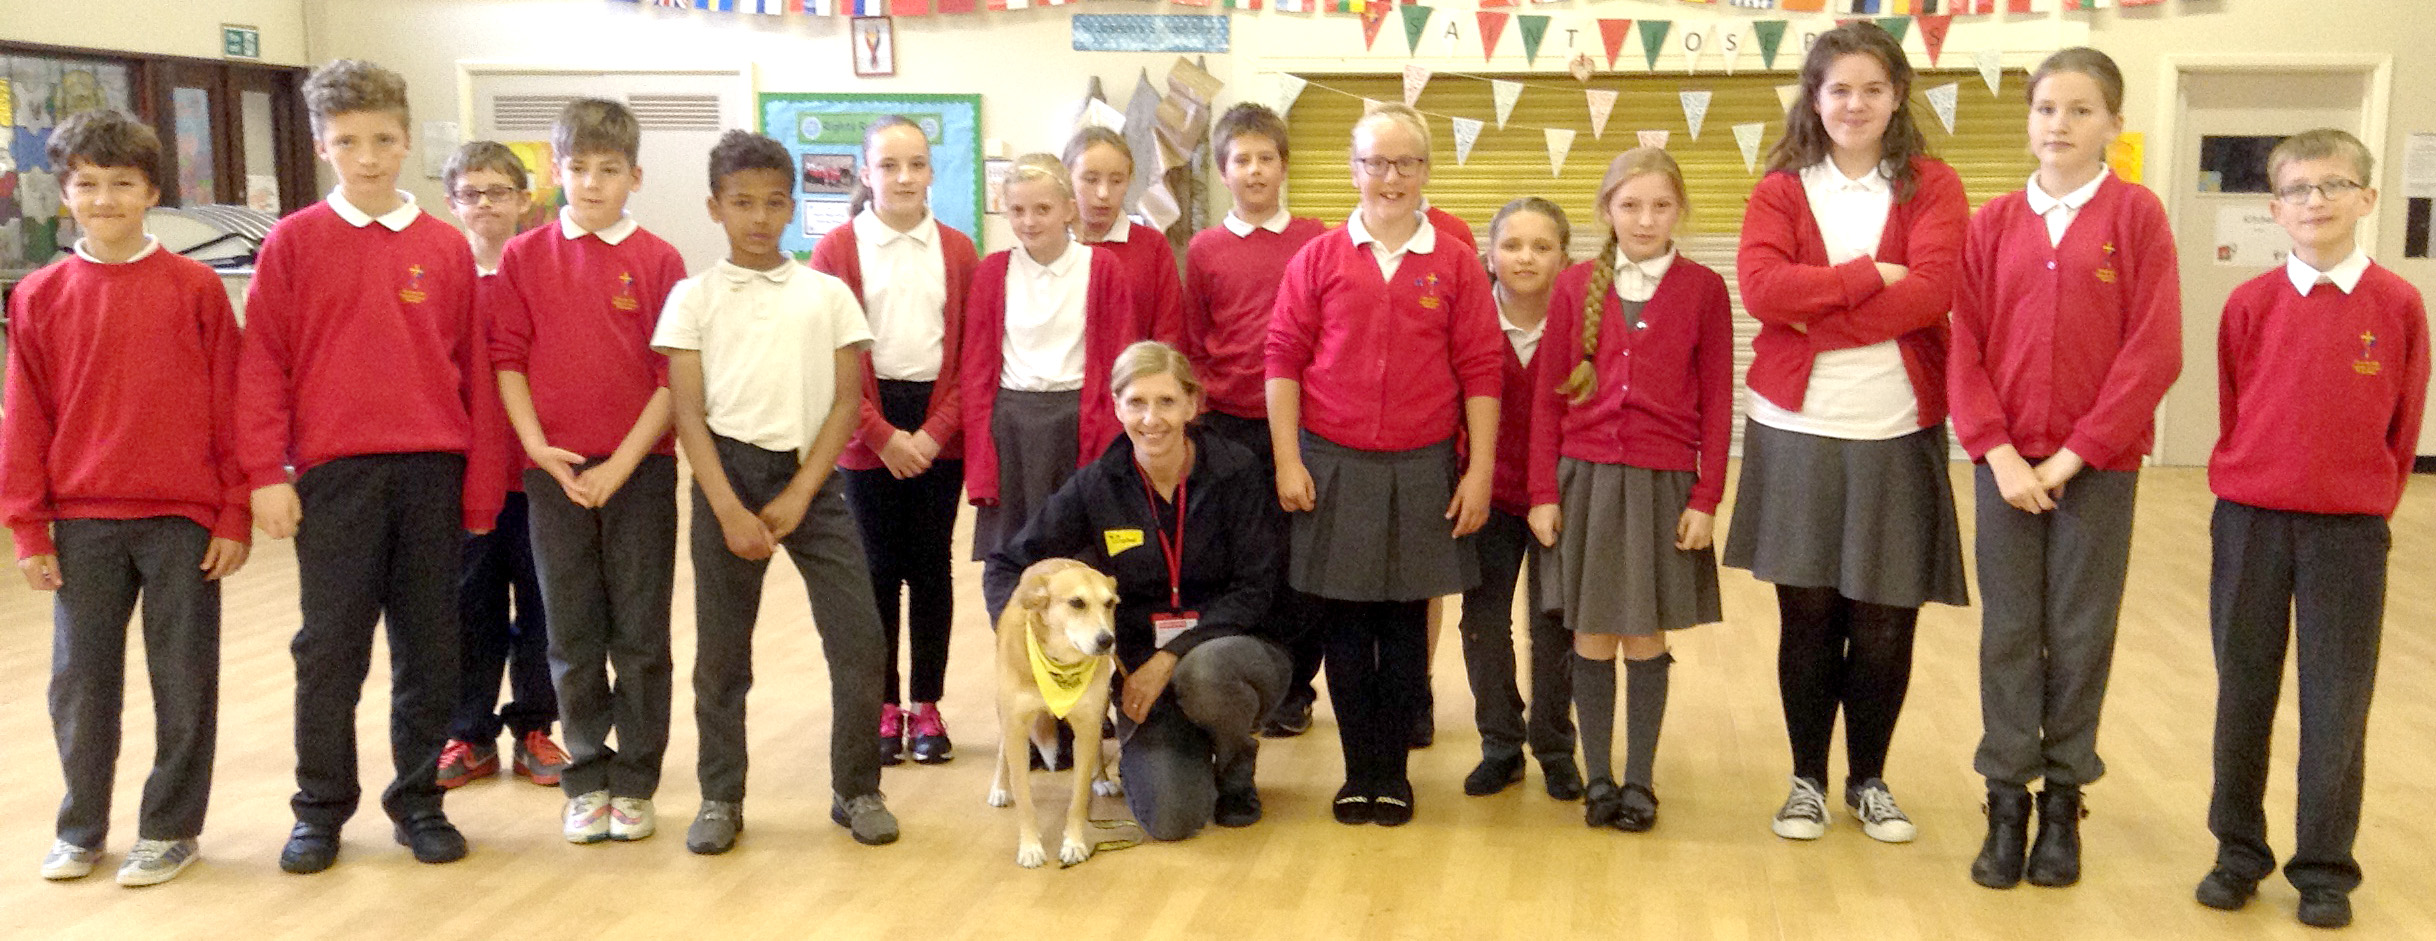 Dogs Trust Workshop for School